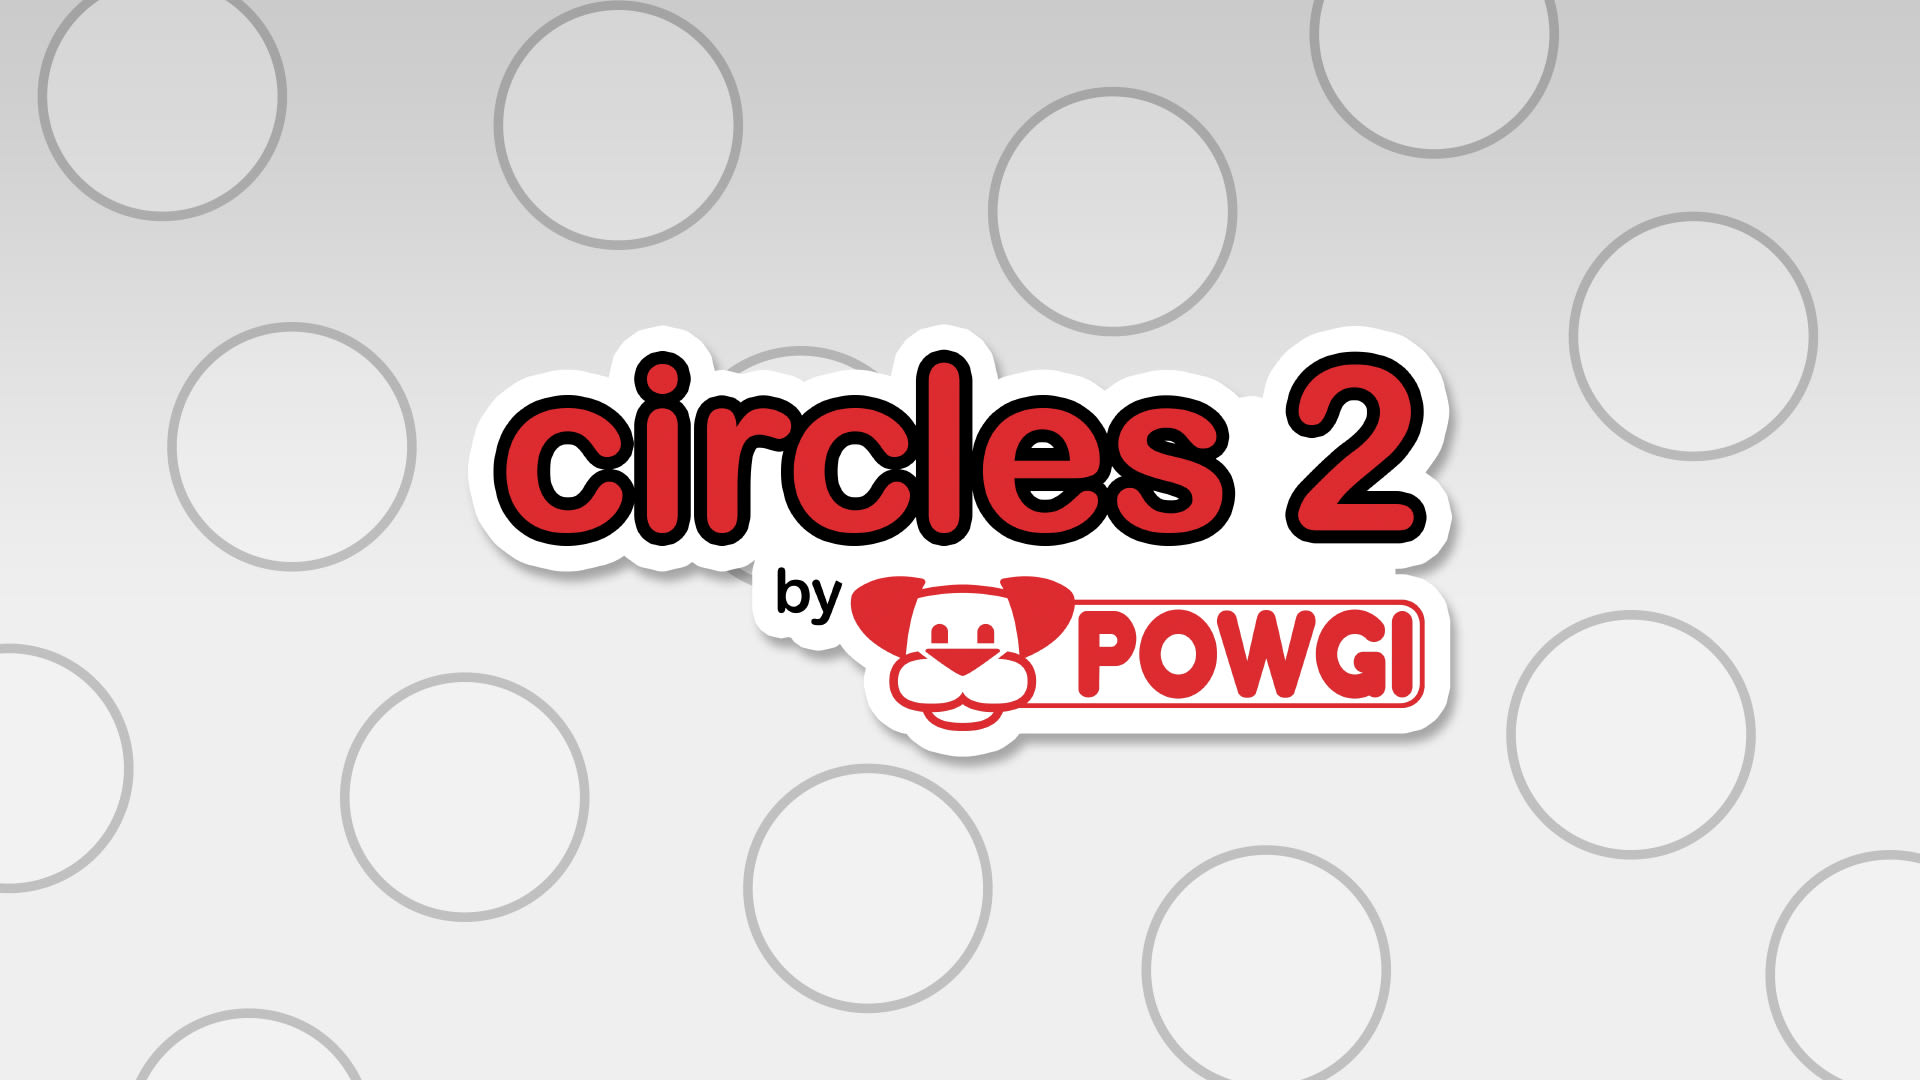 Circles 2 by POWGI